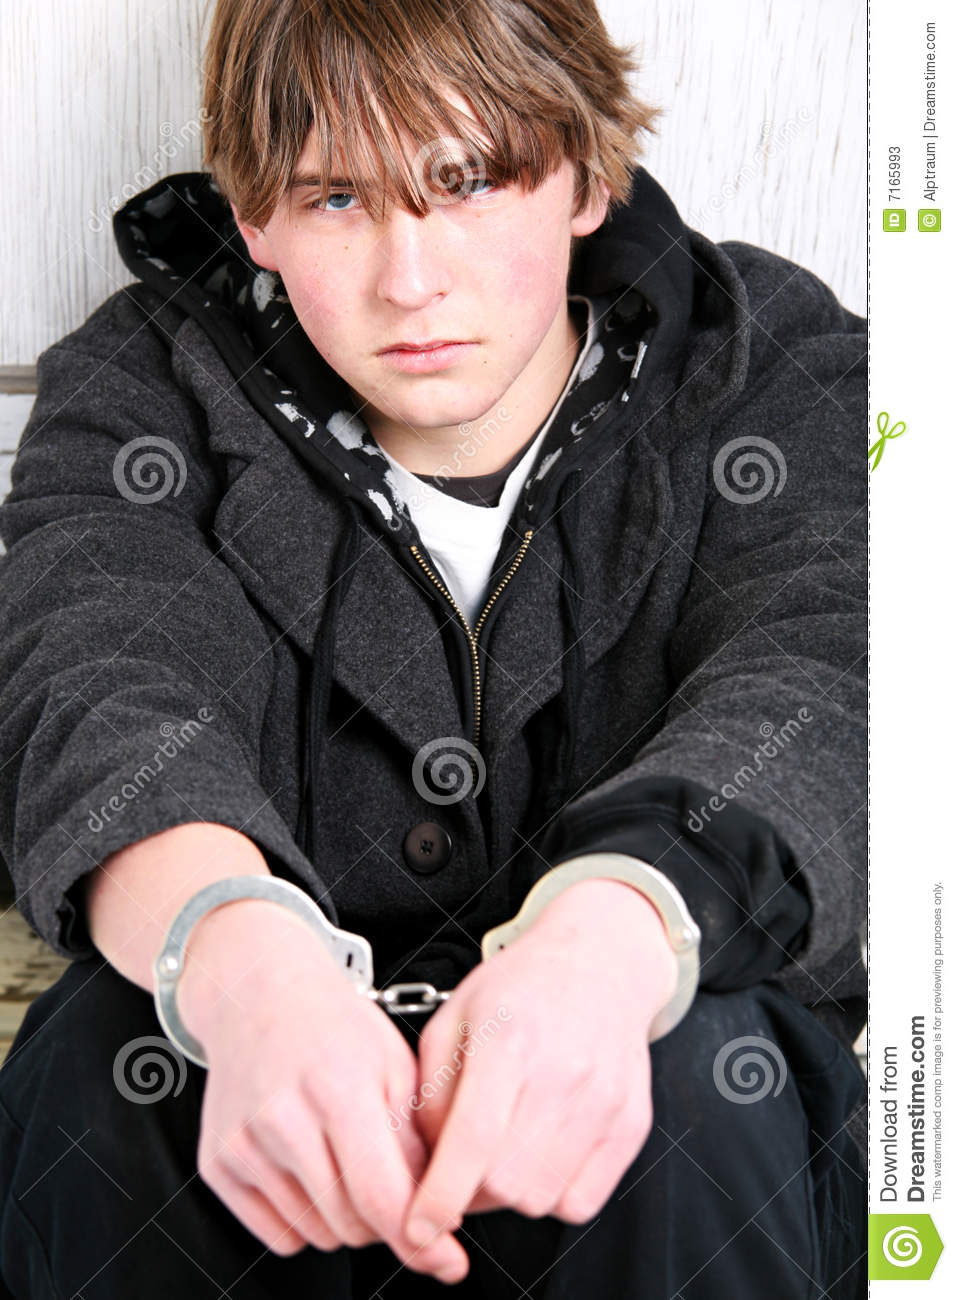 Teen Crime   Juvenile In Handcuffs Against Wall 